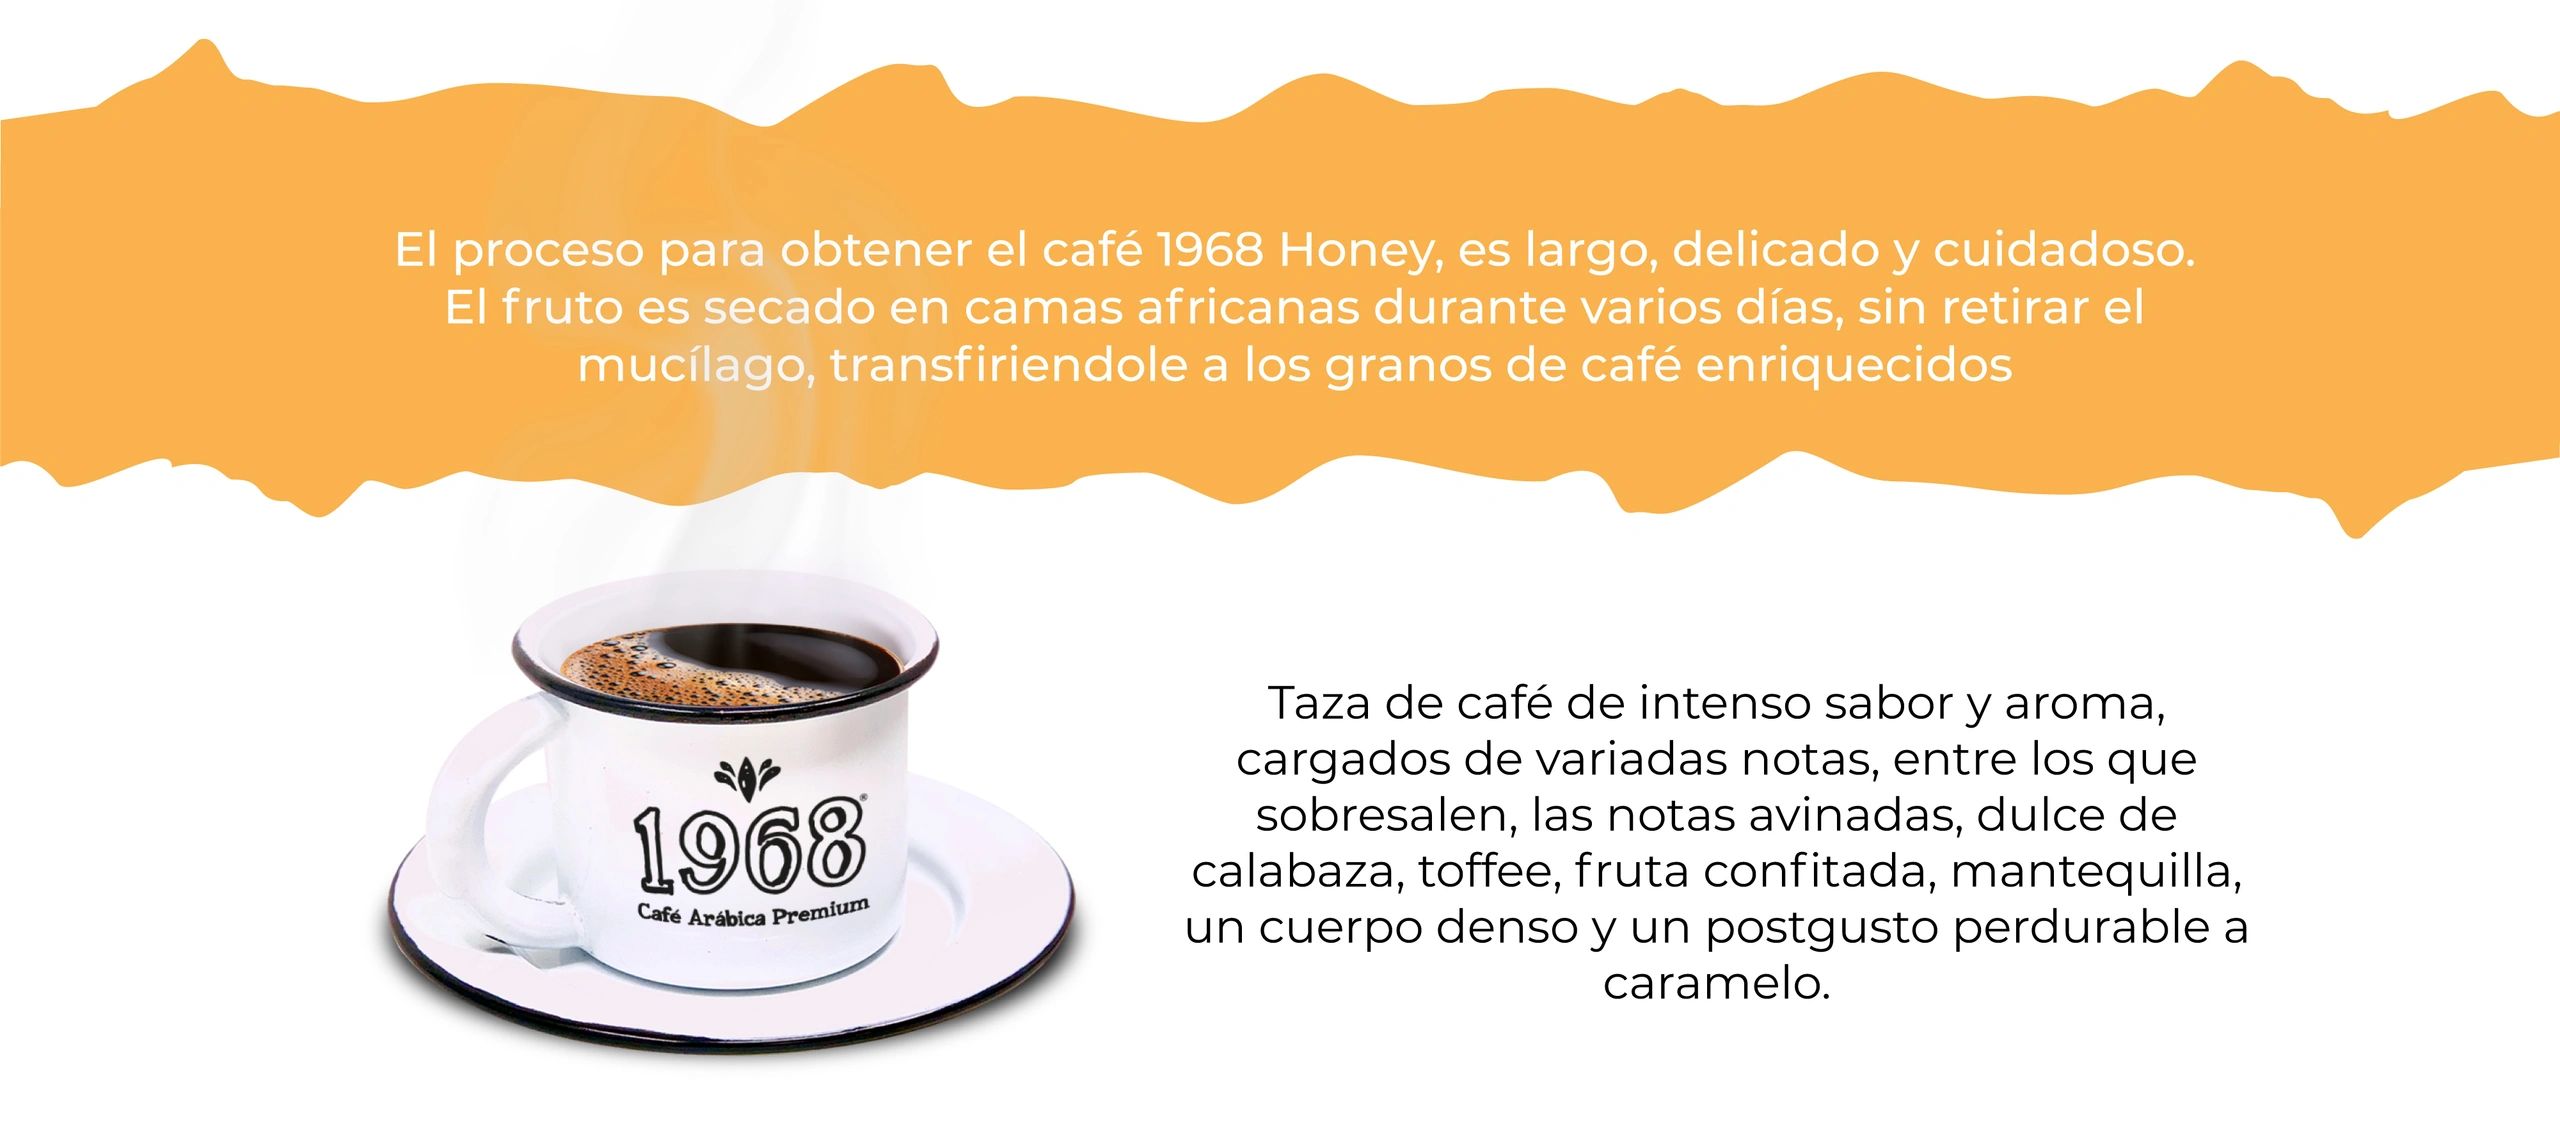 Café certificado Rainforest, beneficiado honey, taza melosa y cítrica, café con notas avinadas